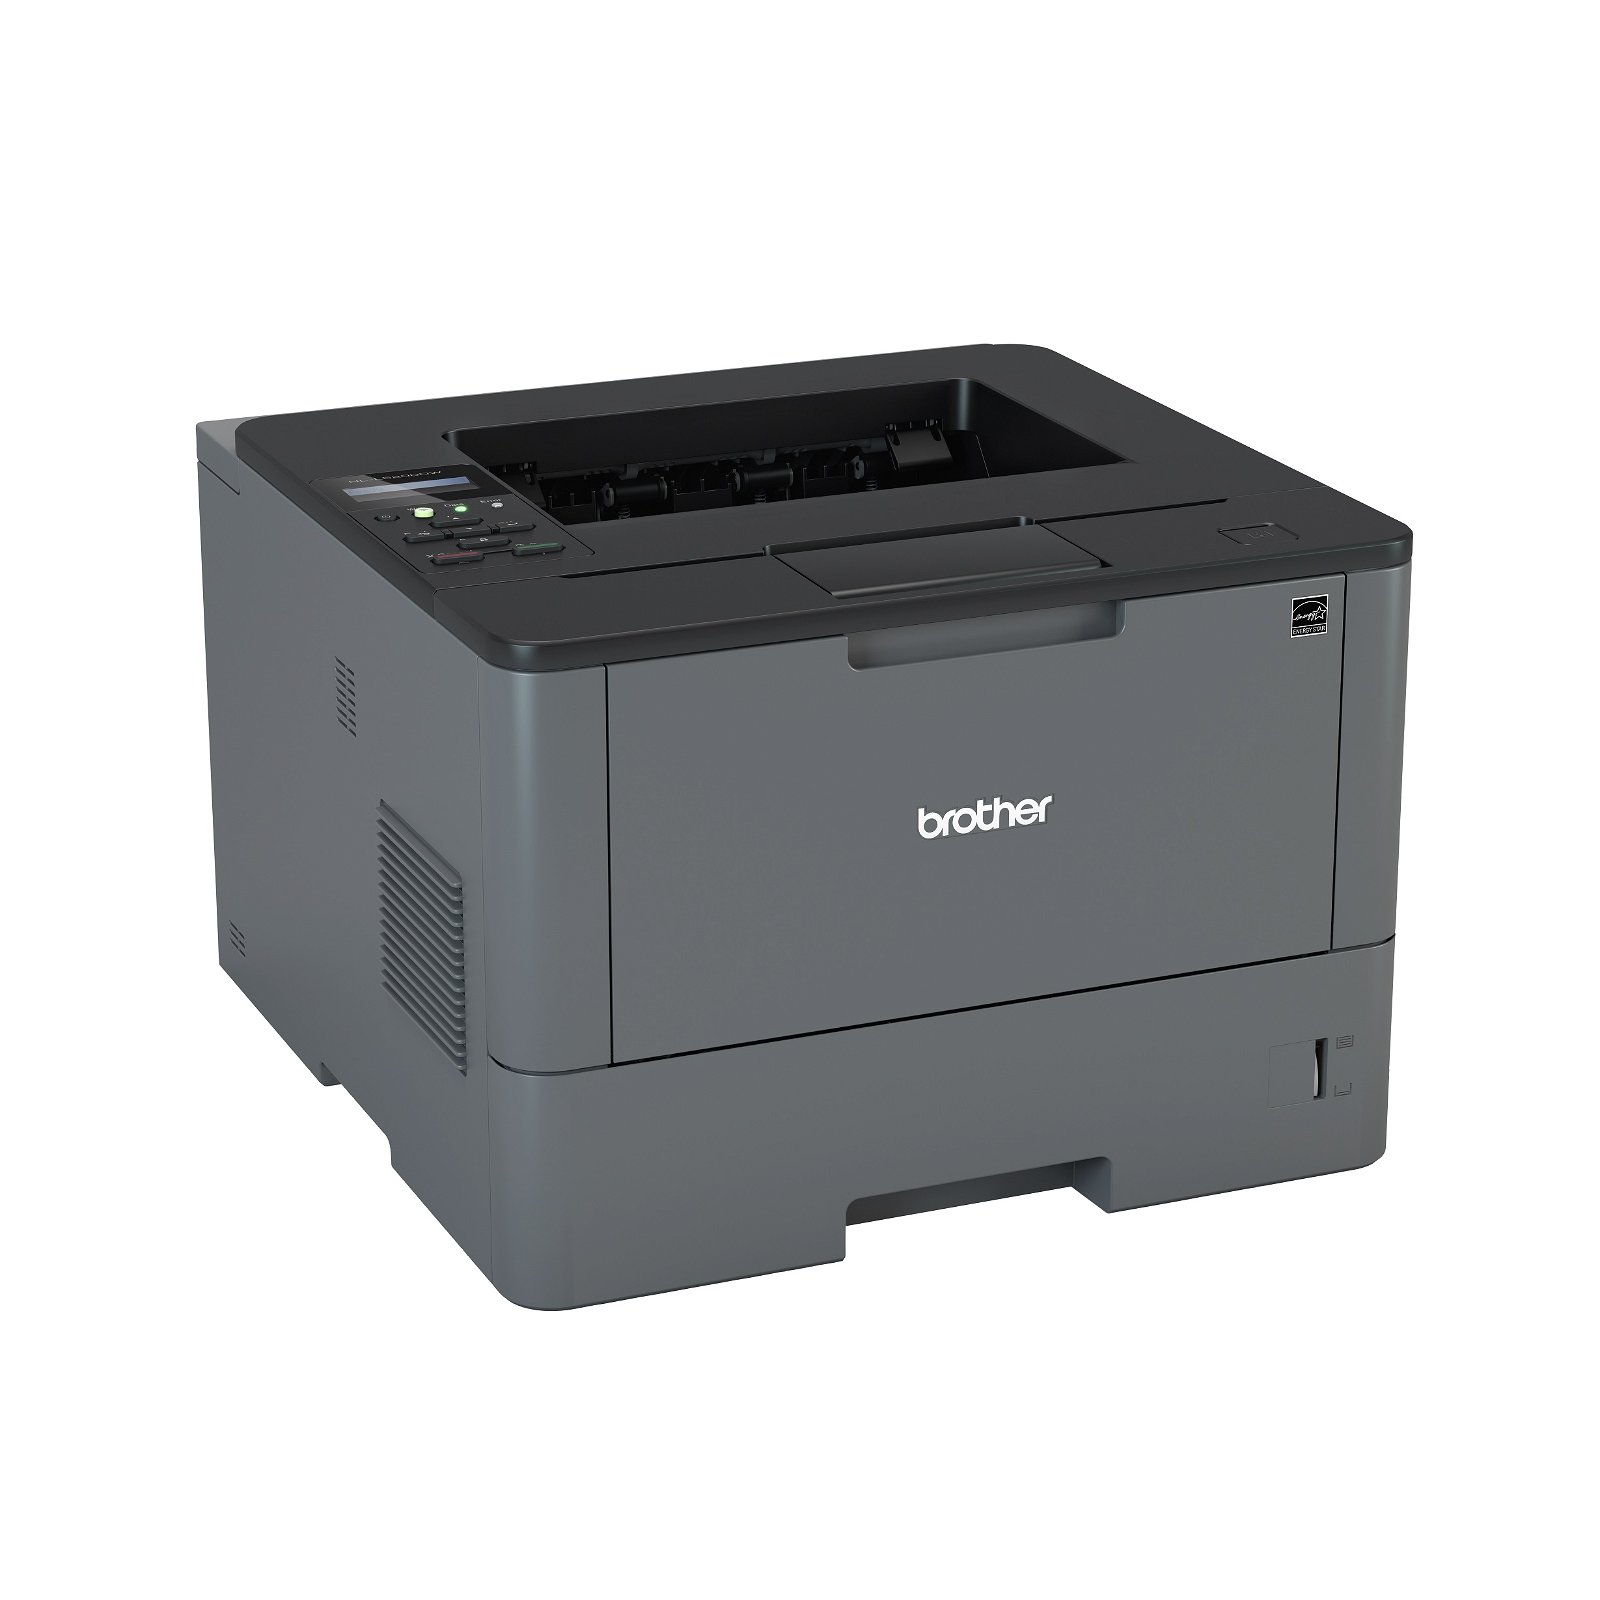 Brother HLL5100DN 40ppm Duplex Network Monochrome Laser Printer + 4 Year Warranty Offer! + LT5500 Paper Tray!